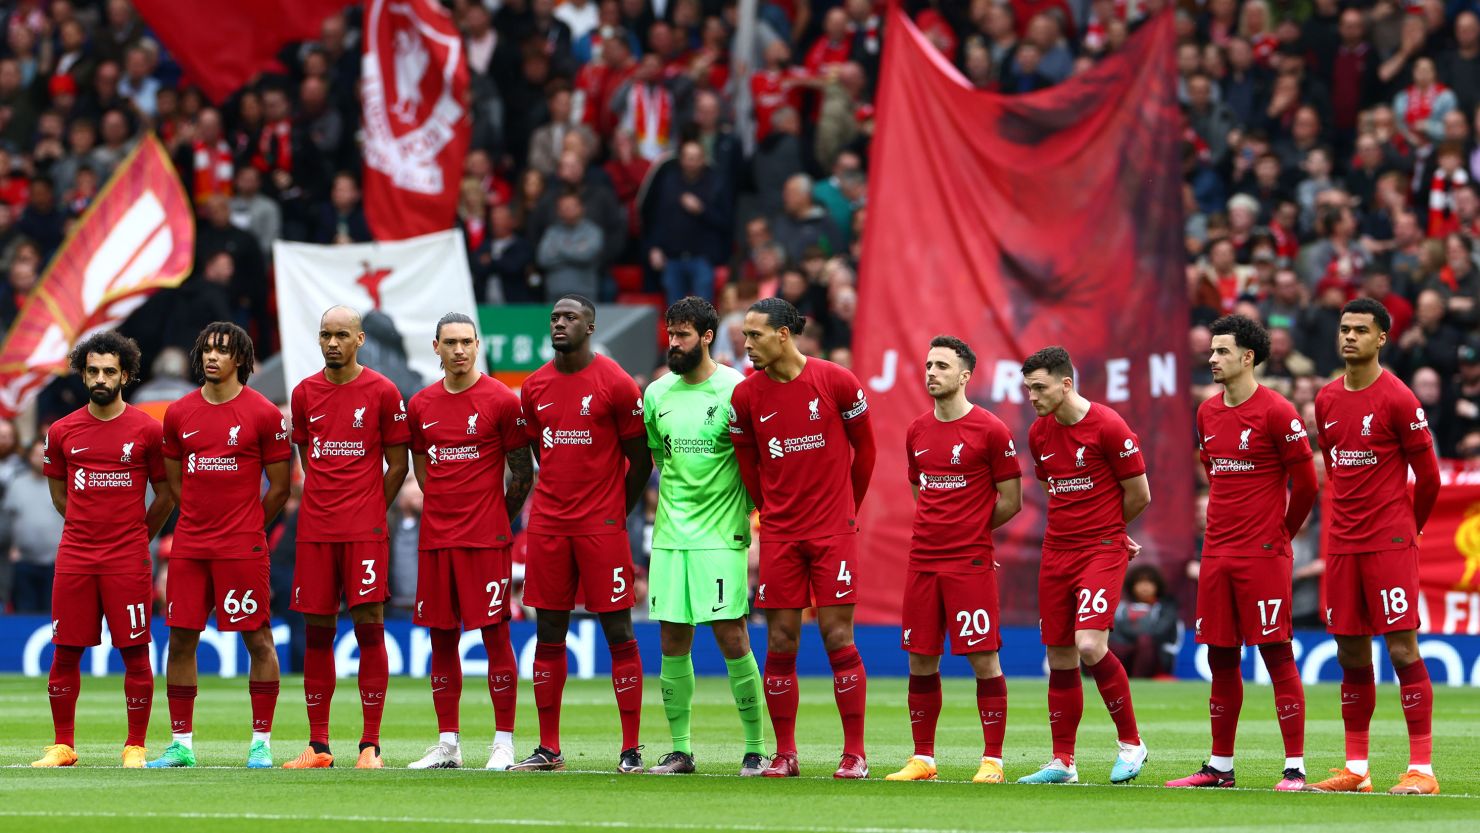 Liverpool Narrow Gap as Season Nears End Sports Al Dente